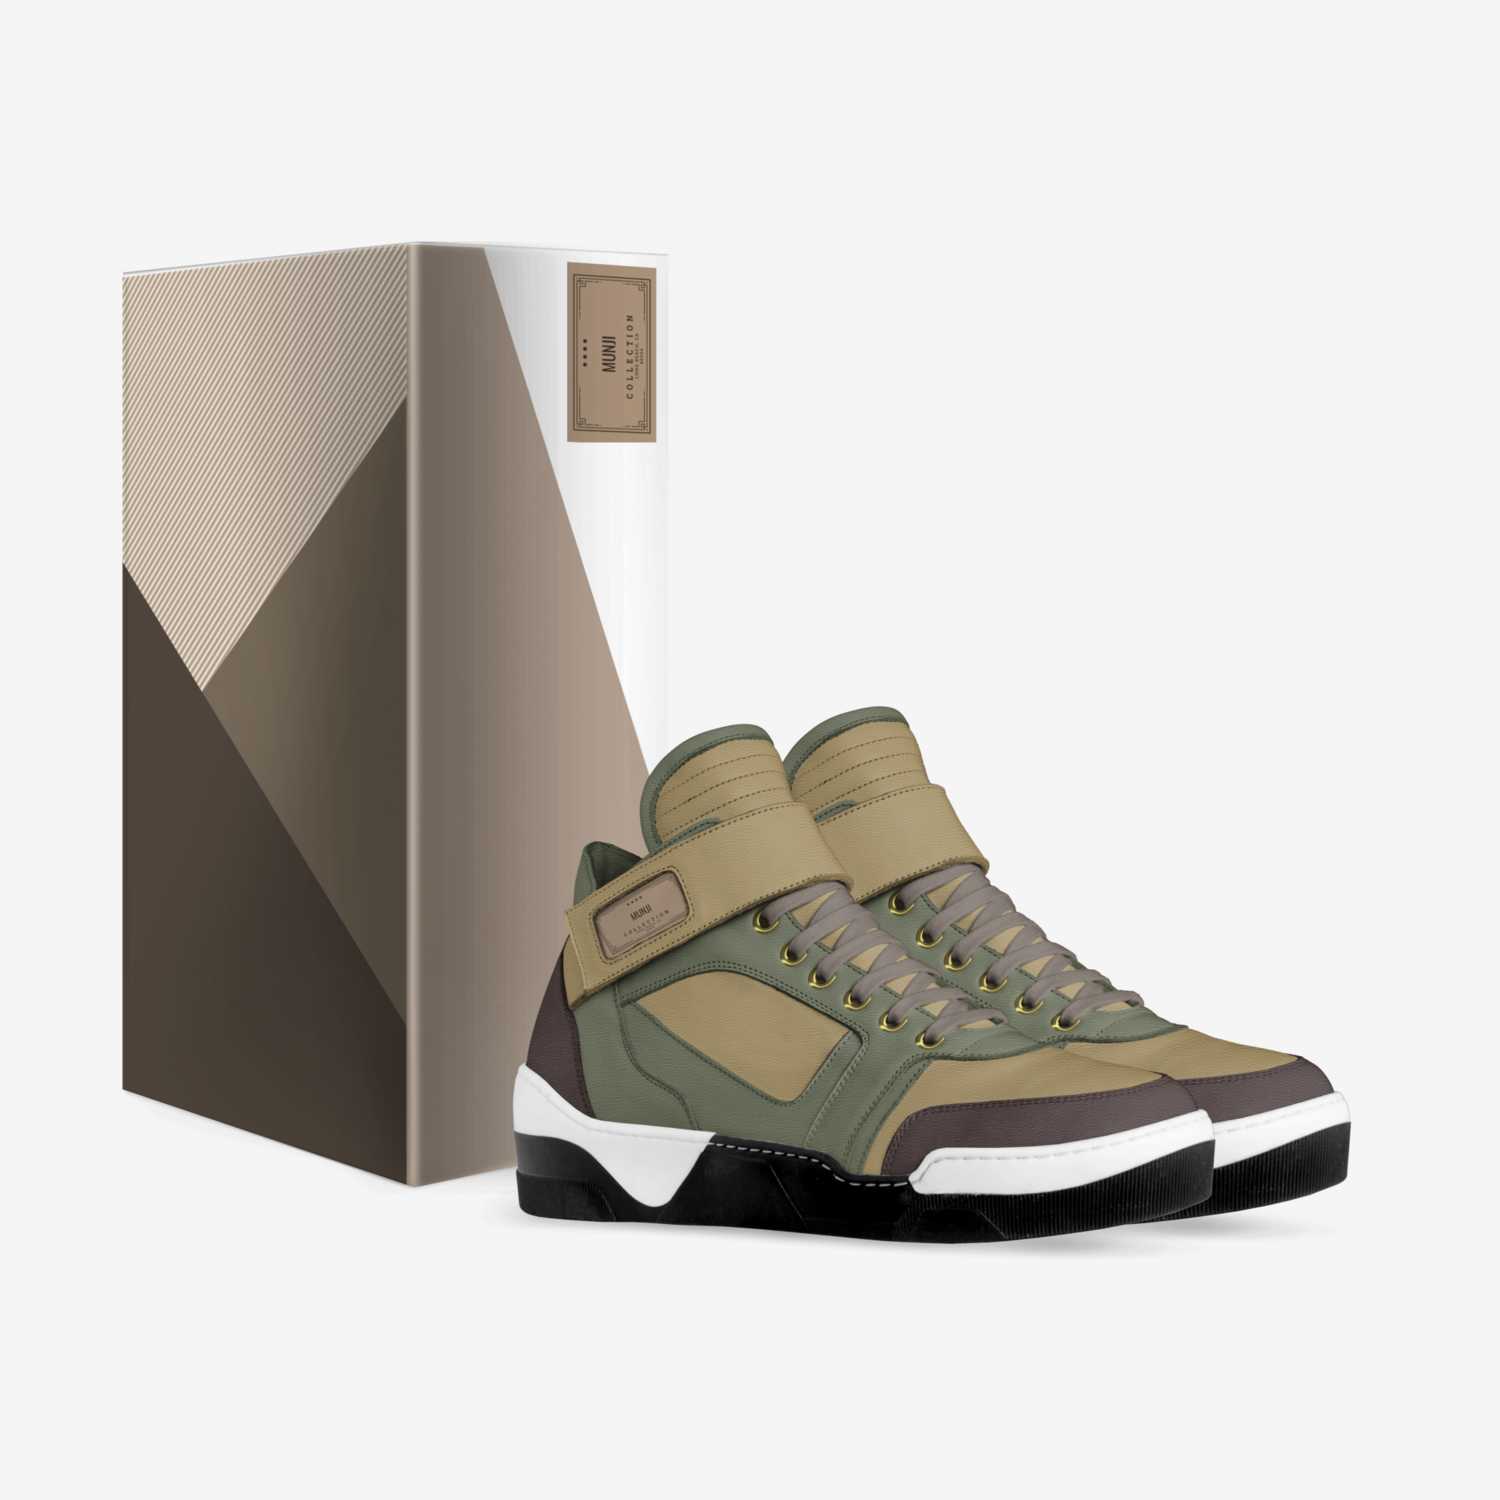 Munji custom made in Italy shoes by Nico Hagopian | Box view